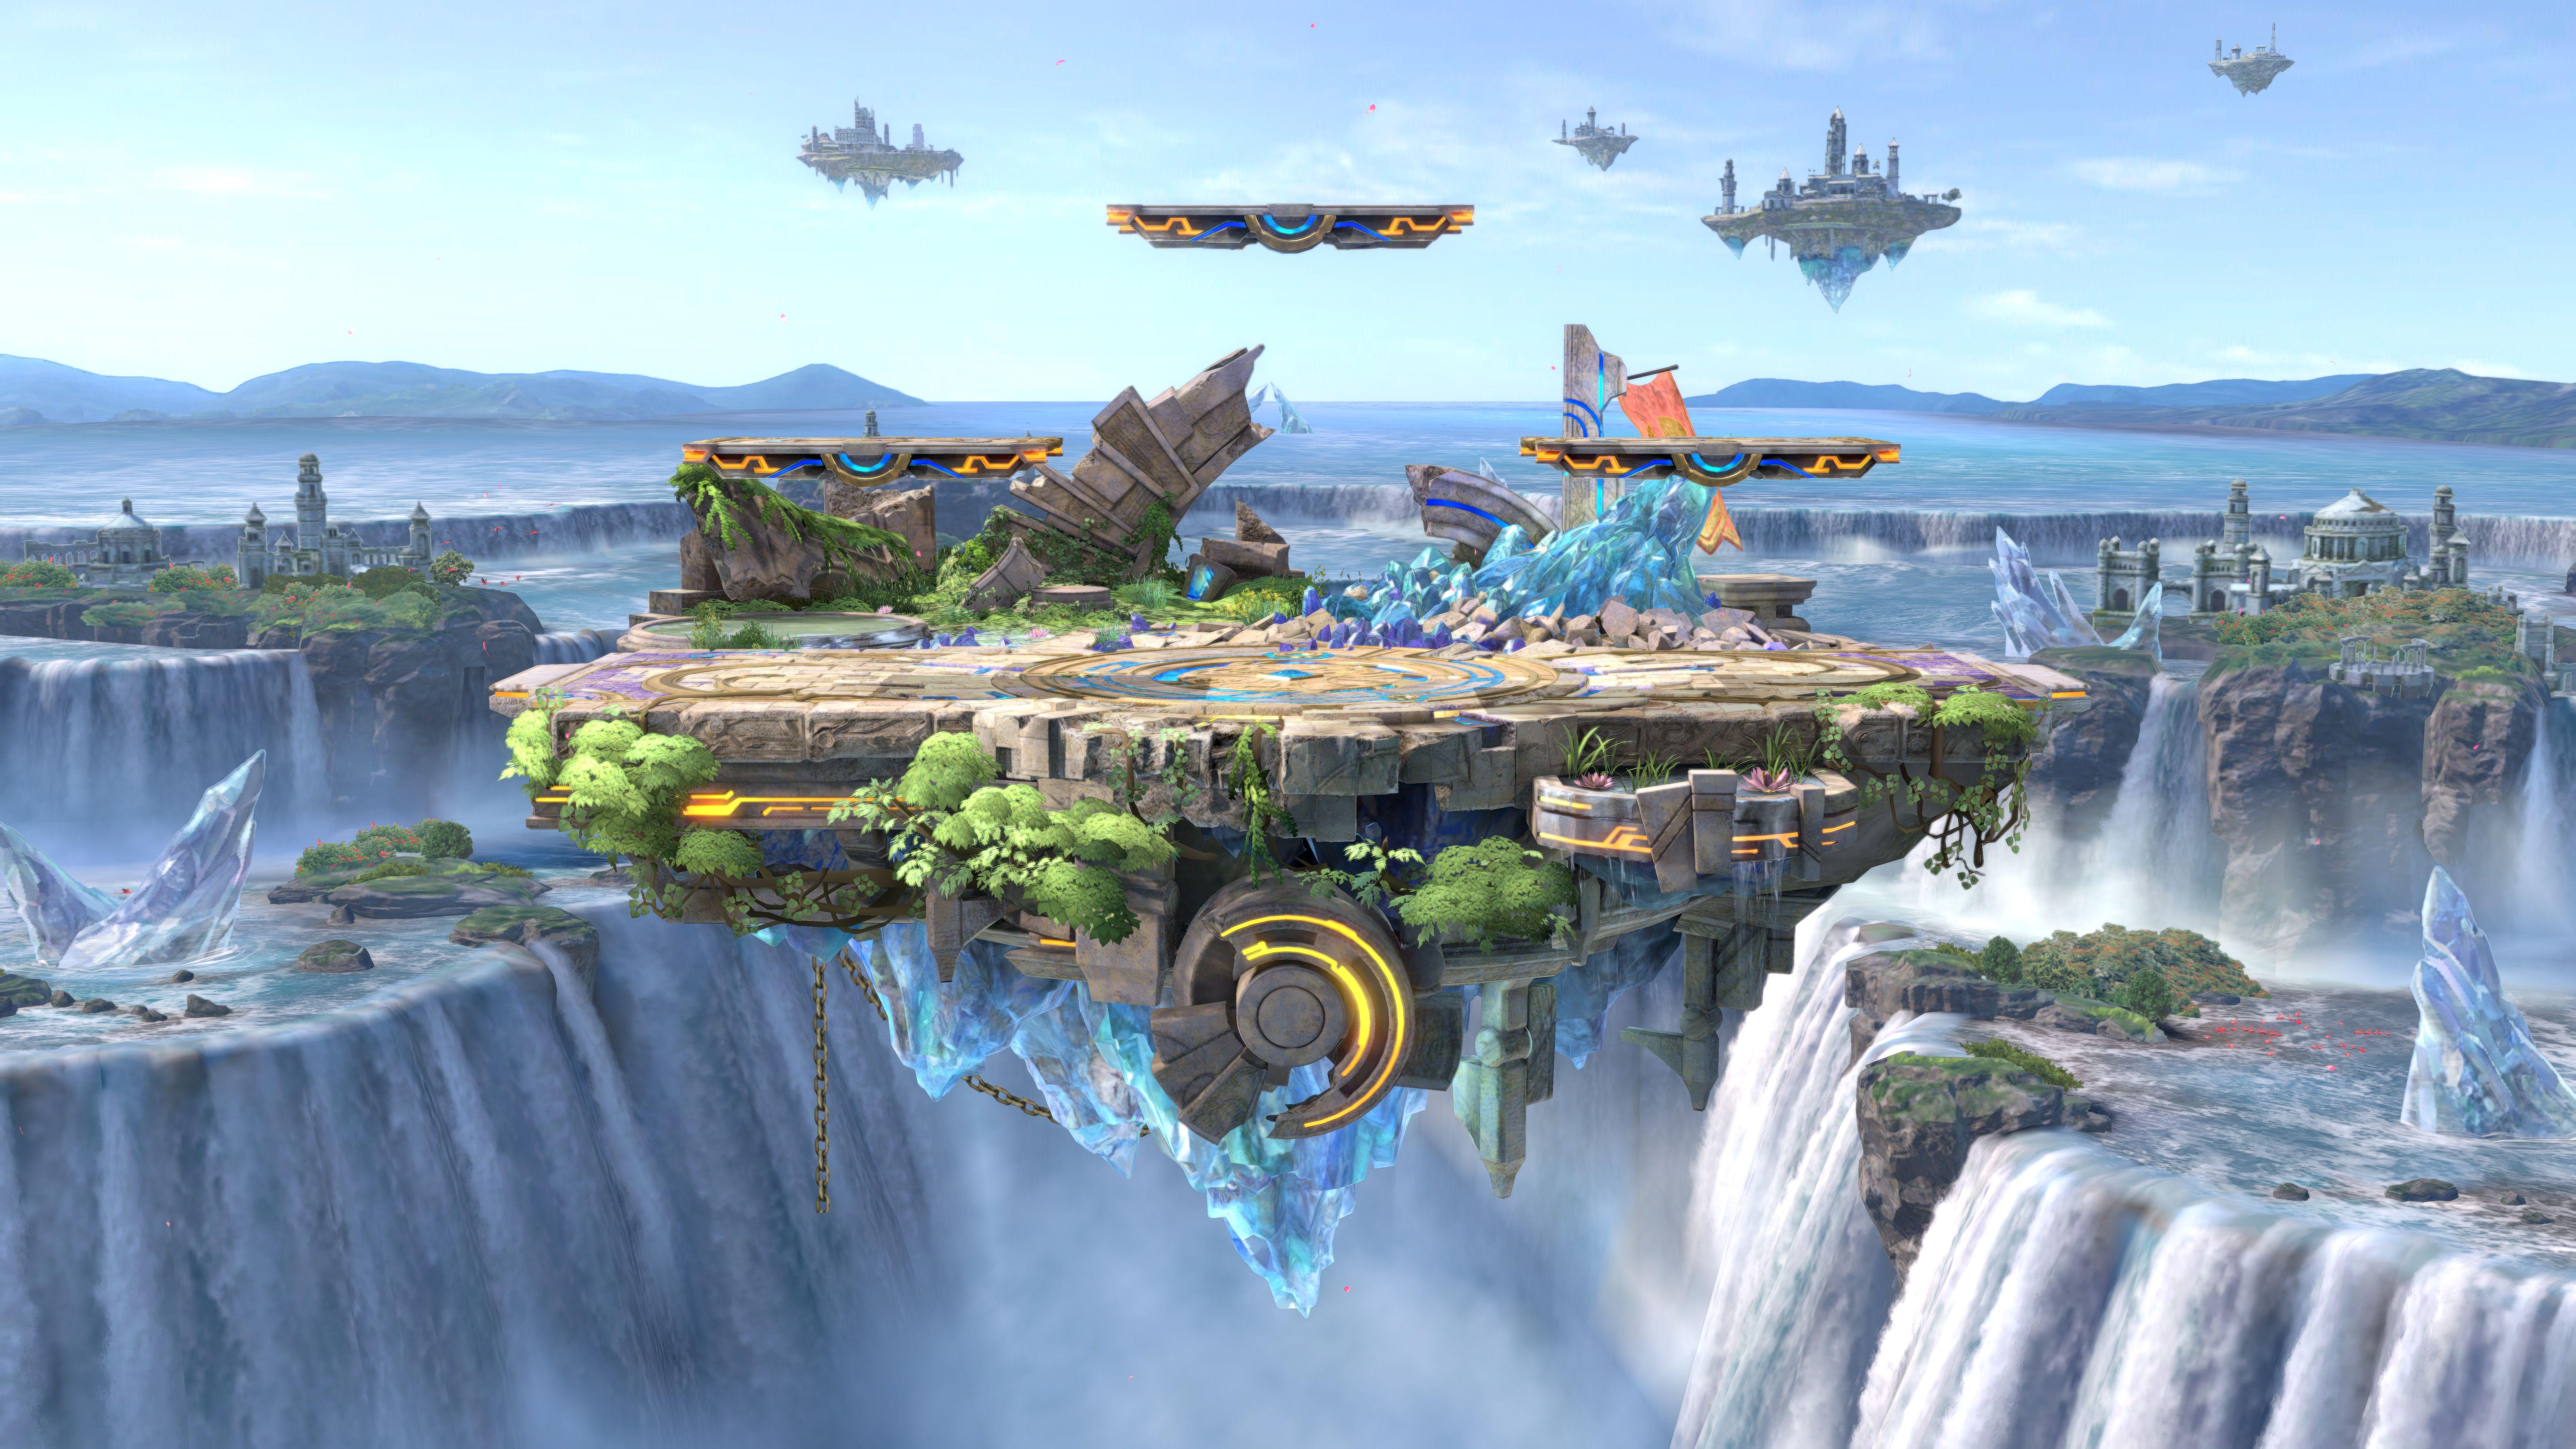 Super Smash Bros. Ultimate Wallpapers - Wallpaper Cave